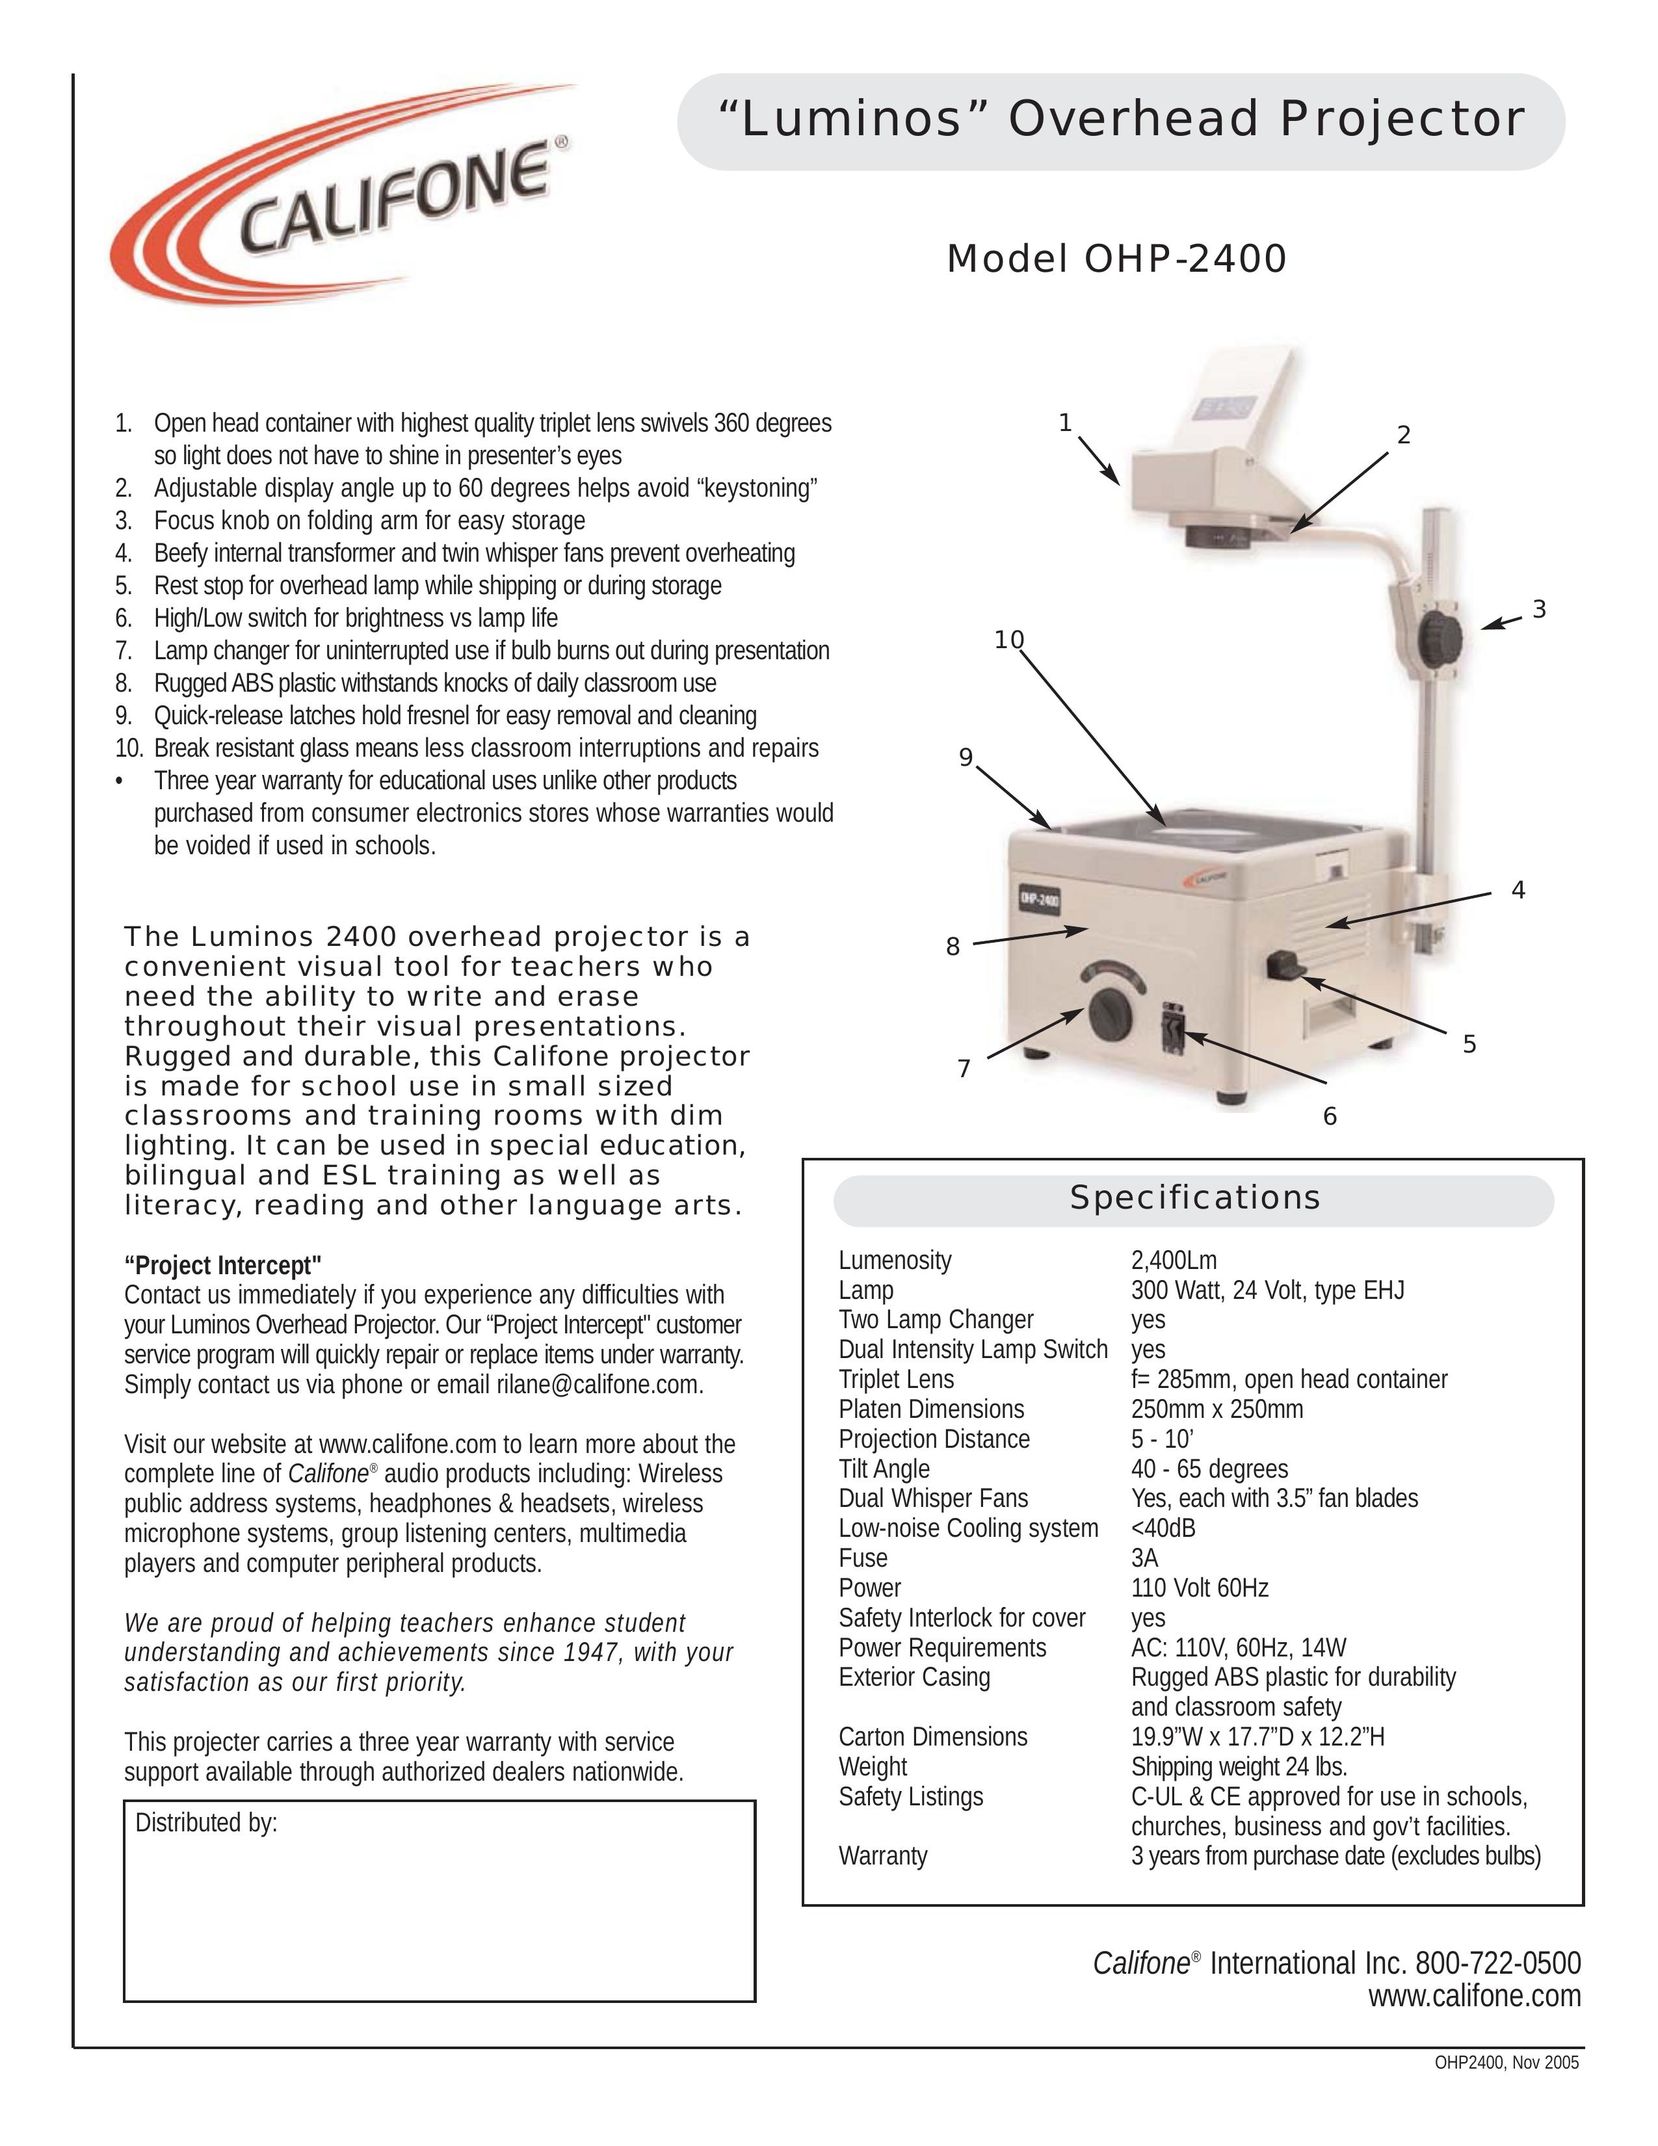 Califone OHP-2400 Projector User Manual